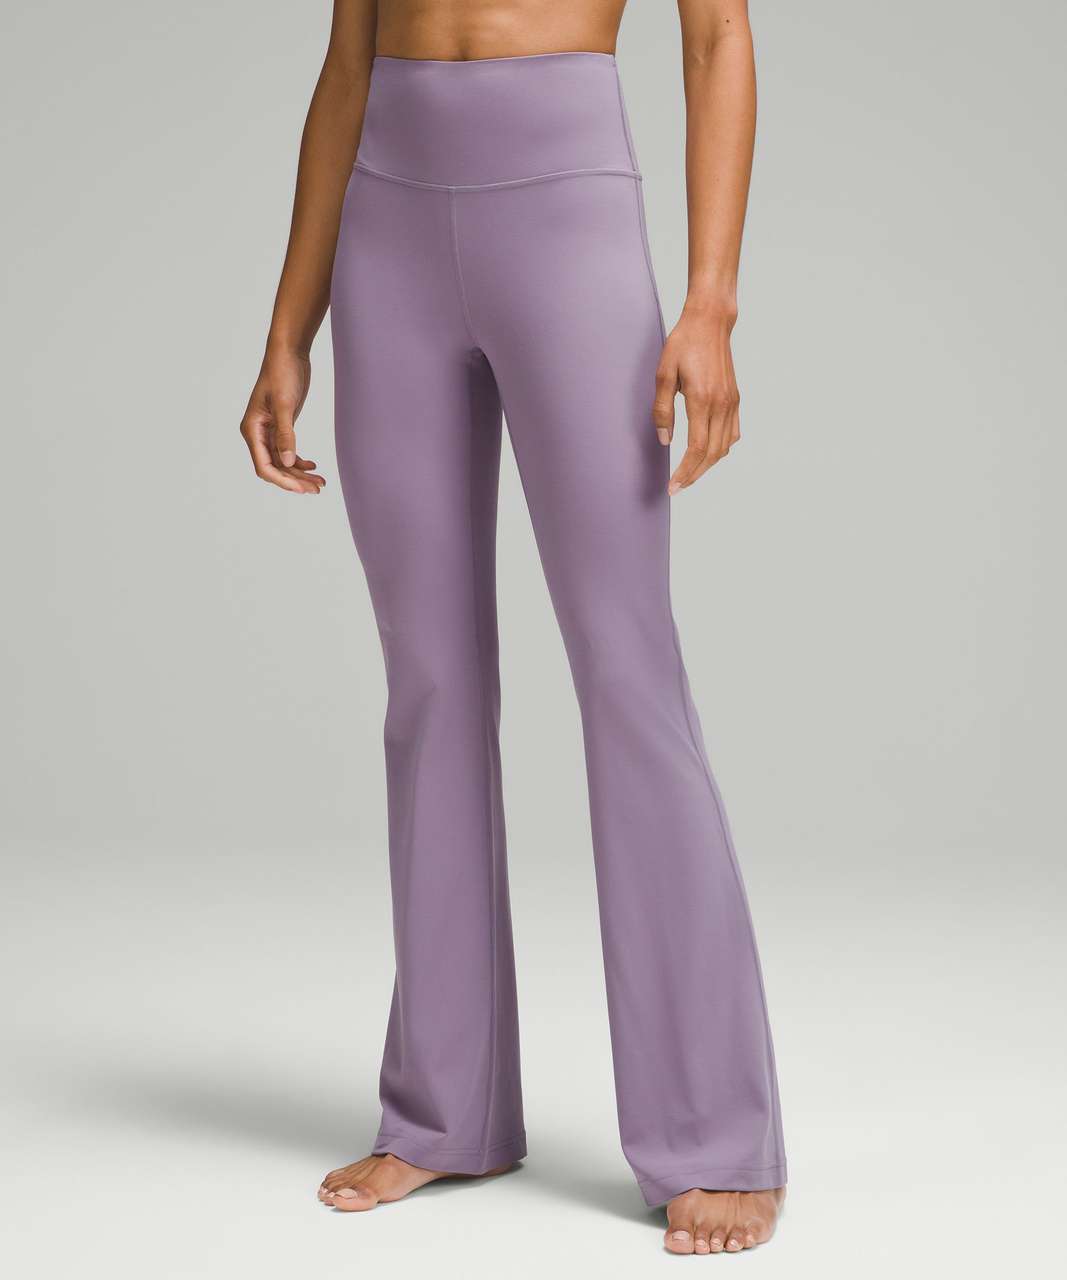 Lululemon Groove Super-High-Rise Flared Pant Nulu Magenta Purple Size 6